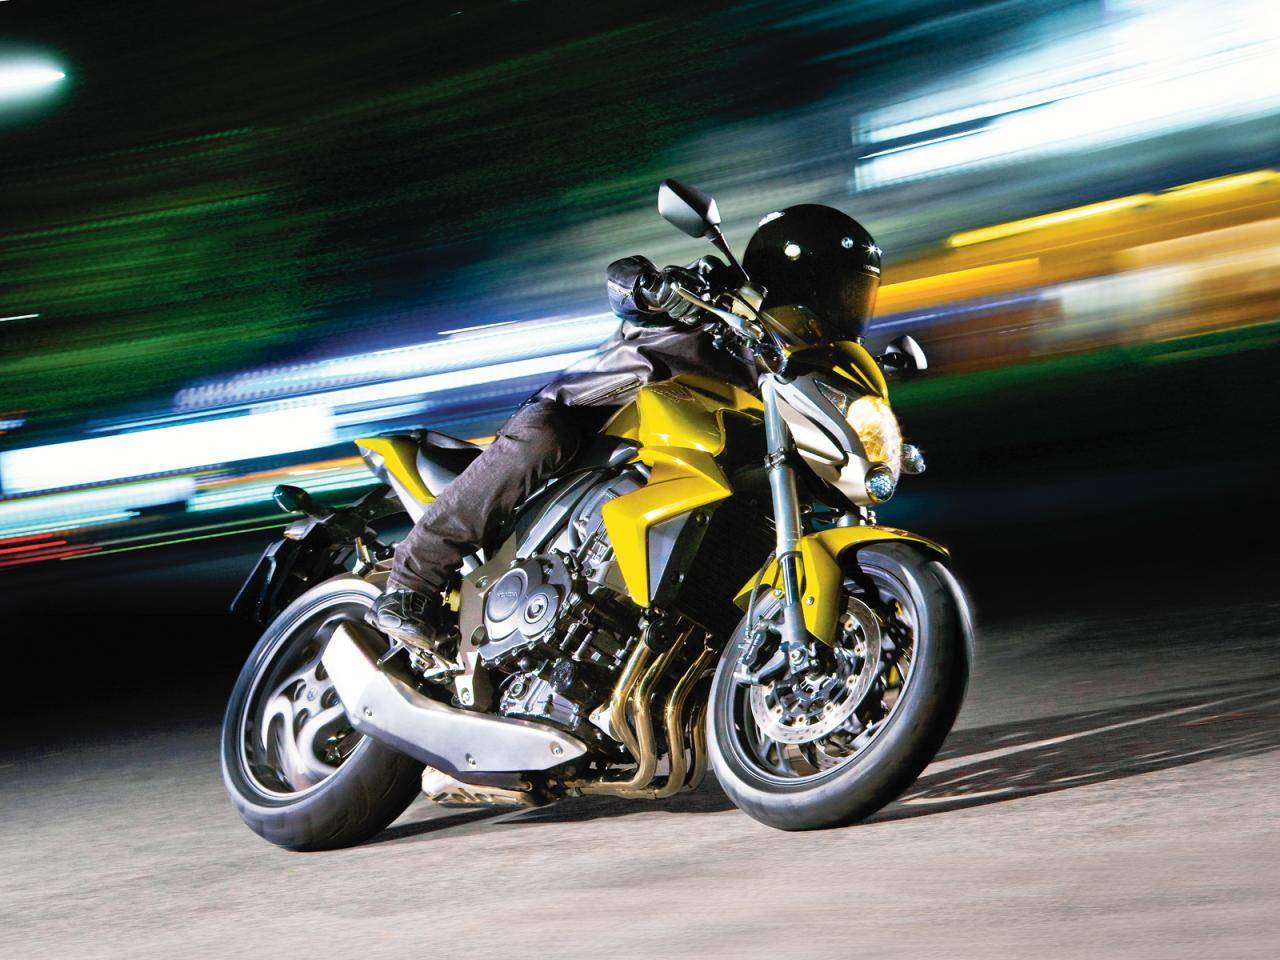 Honda CB1000R in Motion